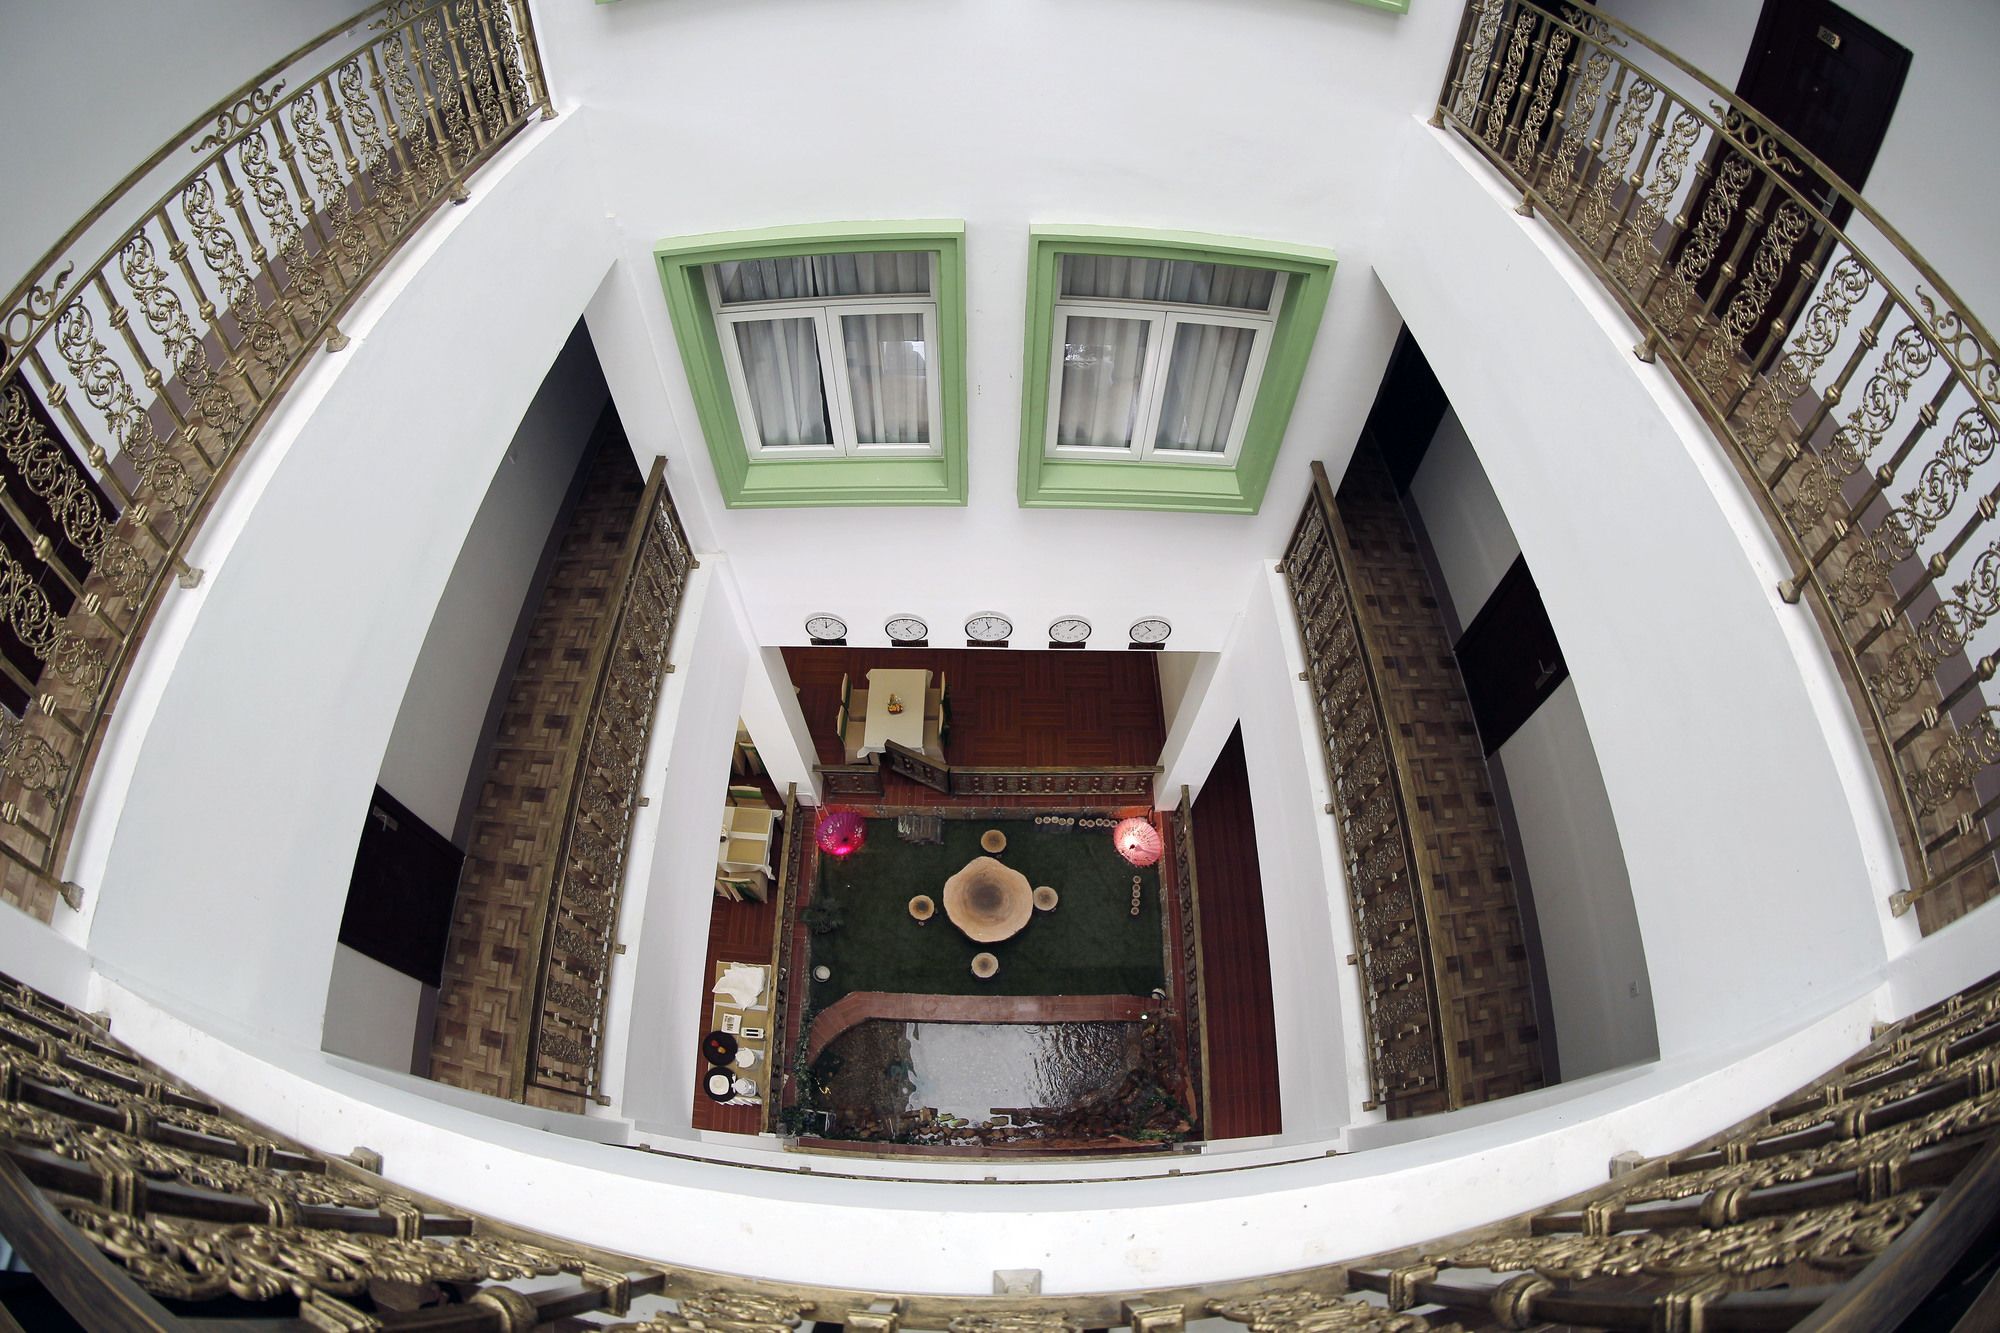 Virtue Highland Hotel Yangón Exterior foto